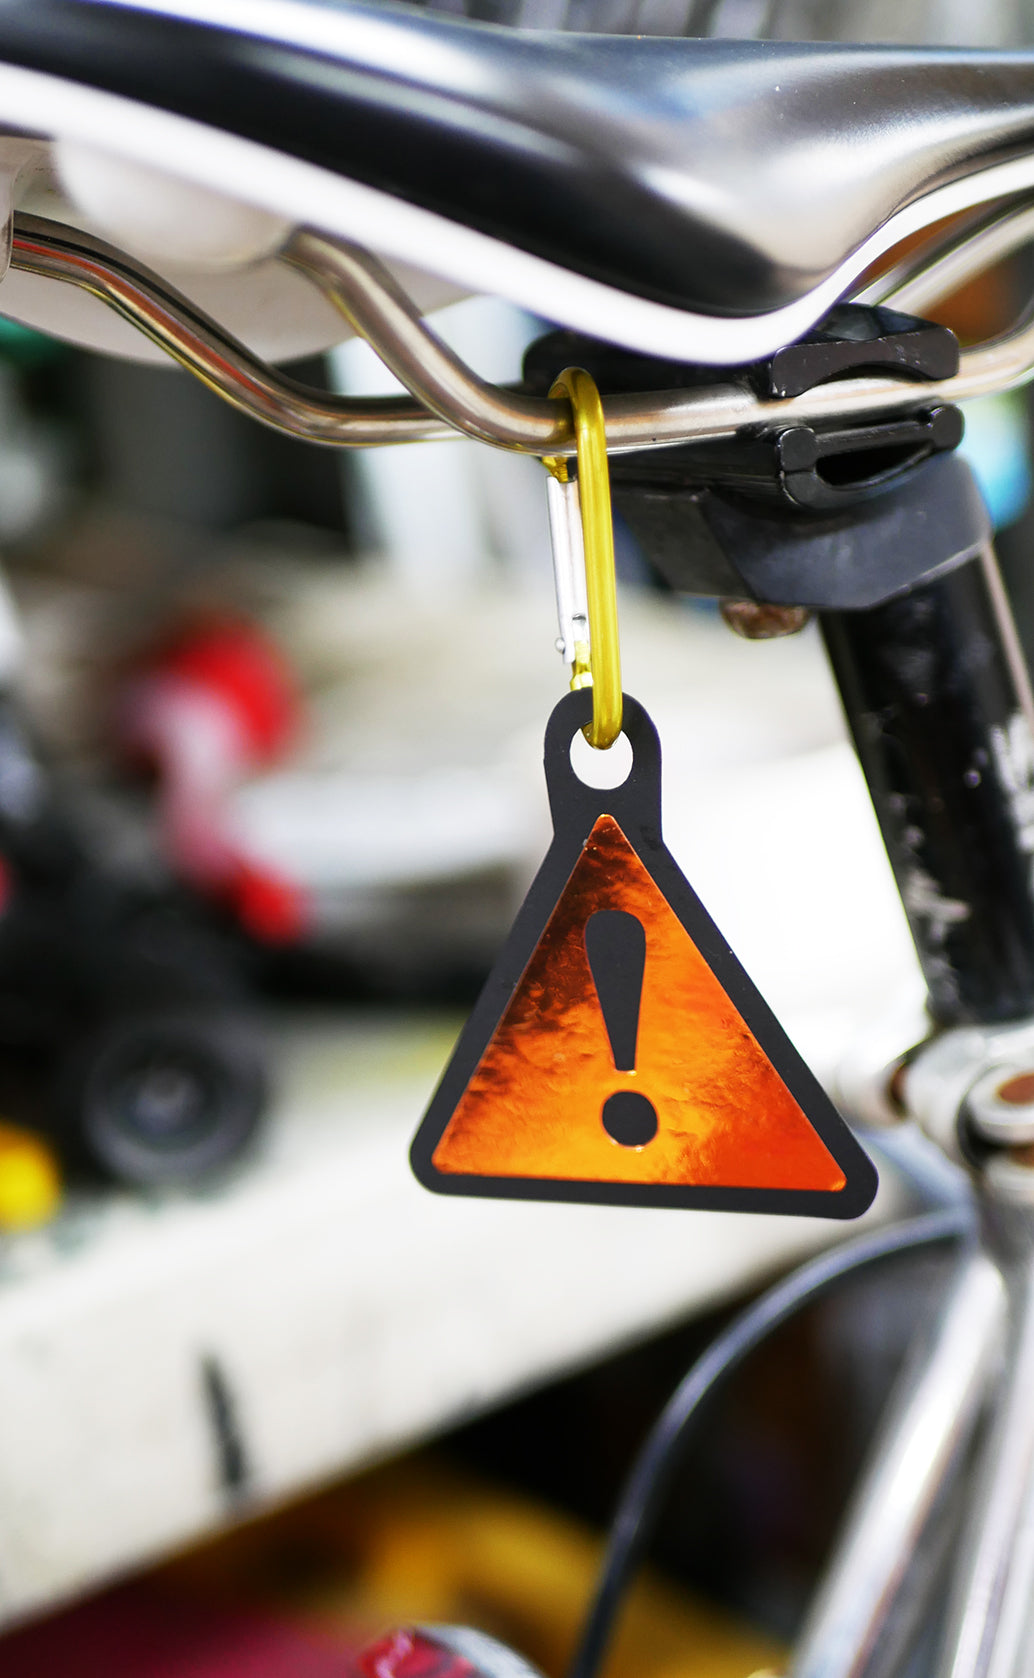 "Caution" Safety Bike Reflector